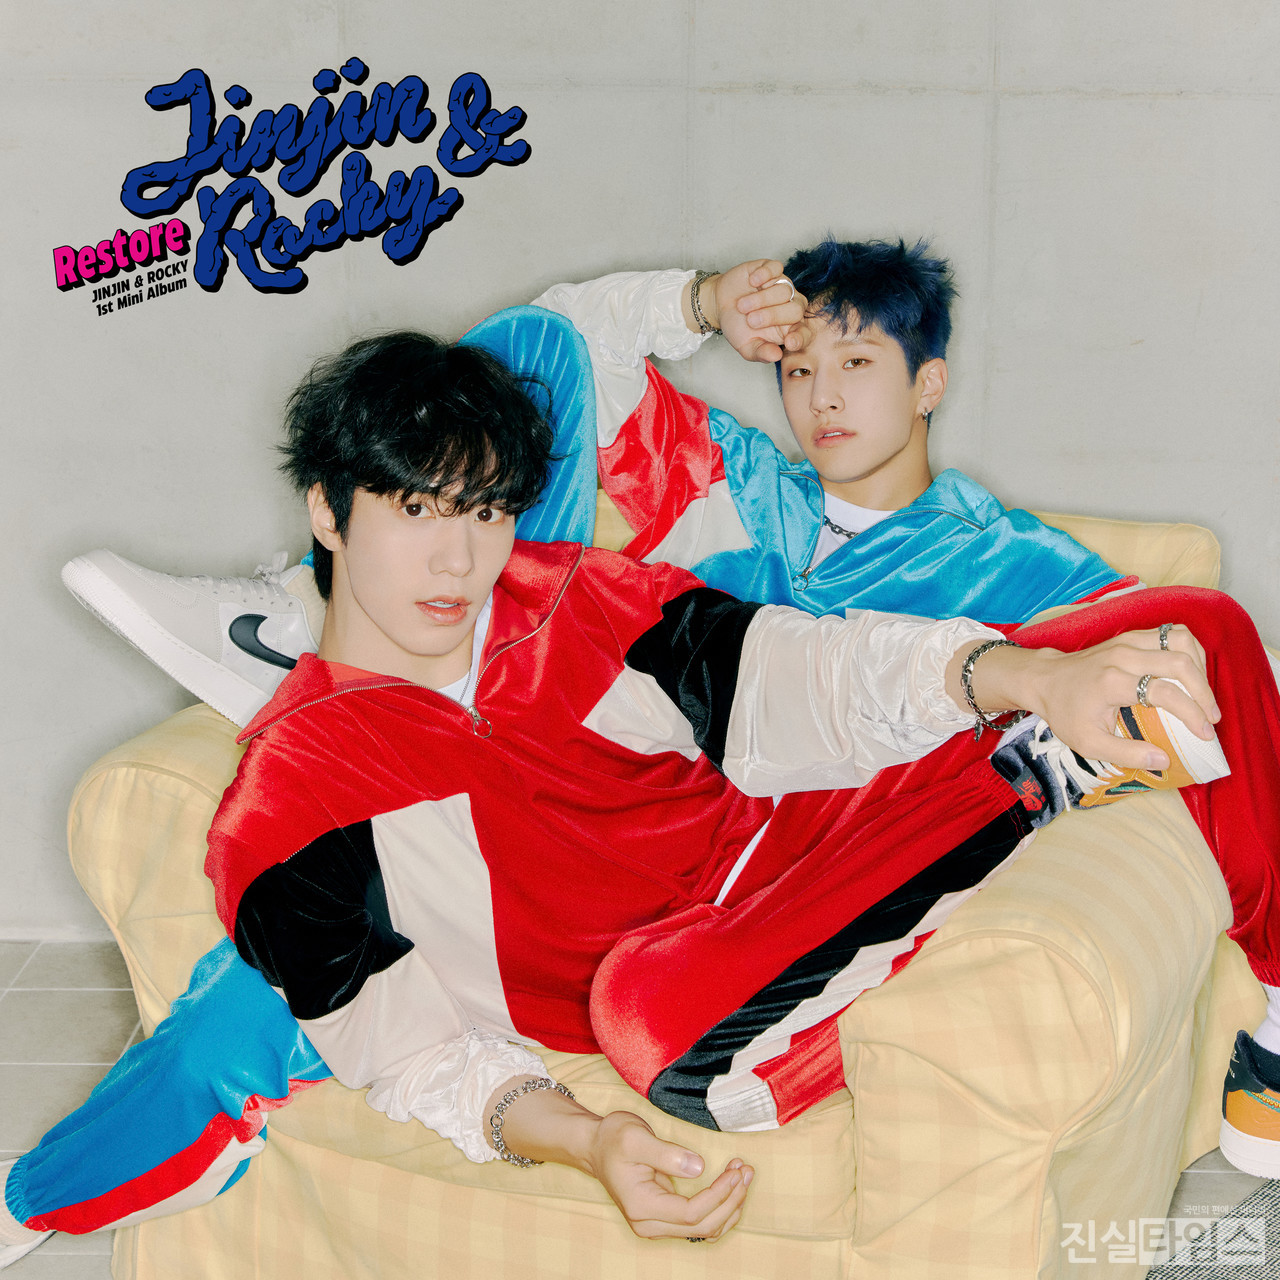 JINJIN &amp; ROCKY — Restore cover artwork